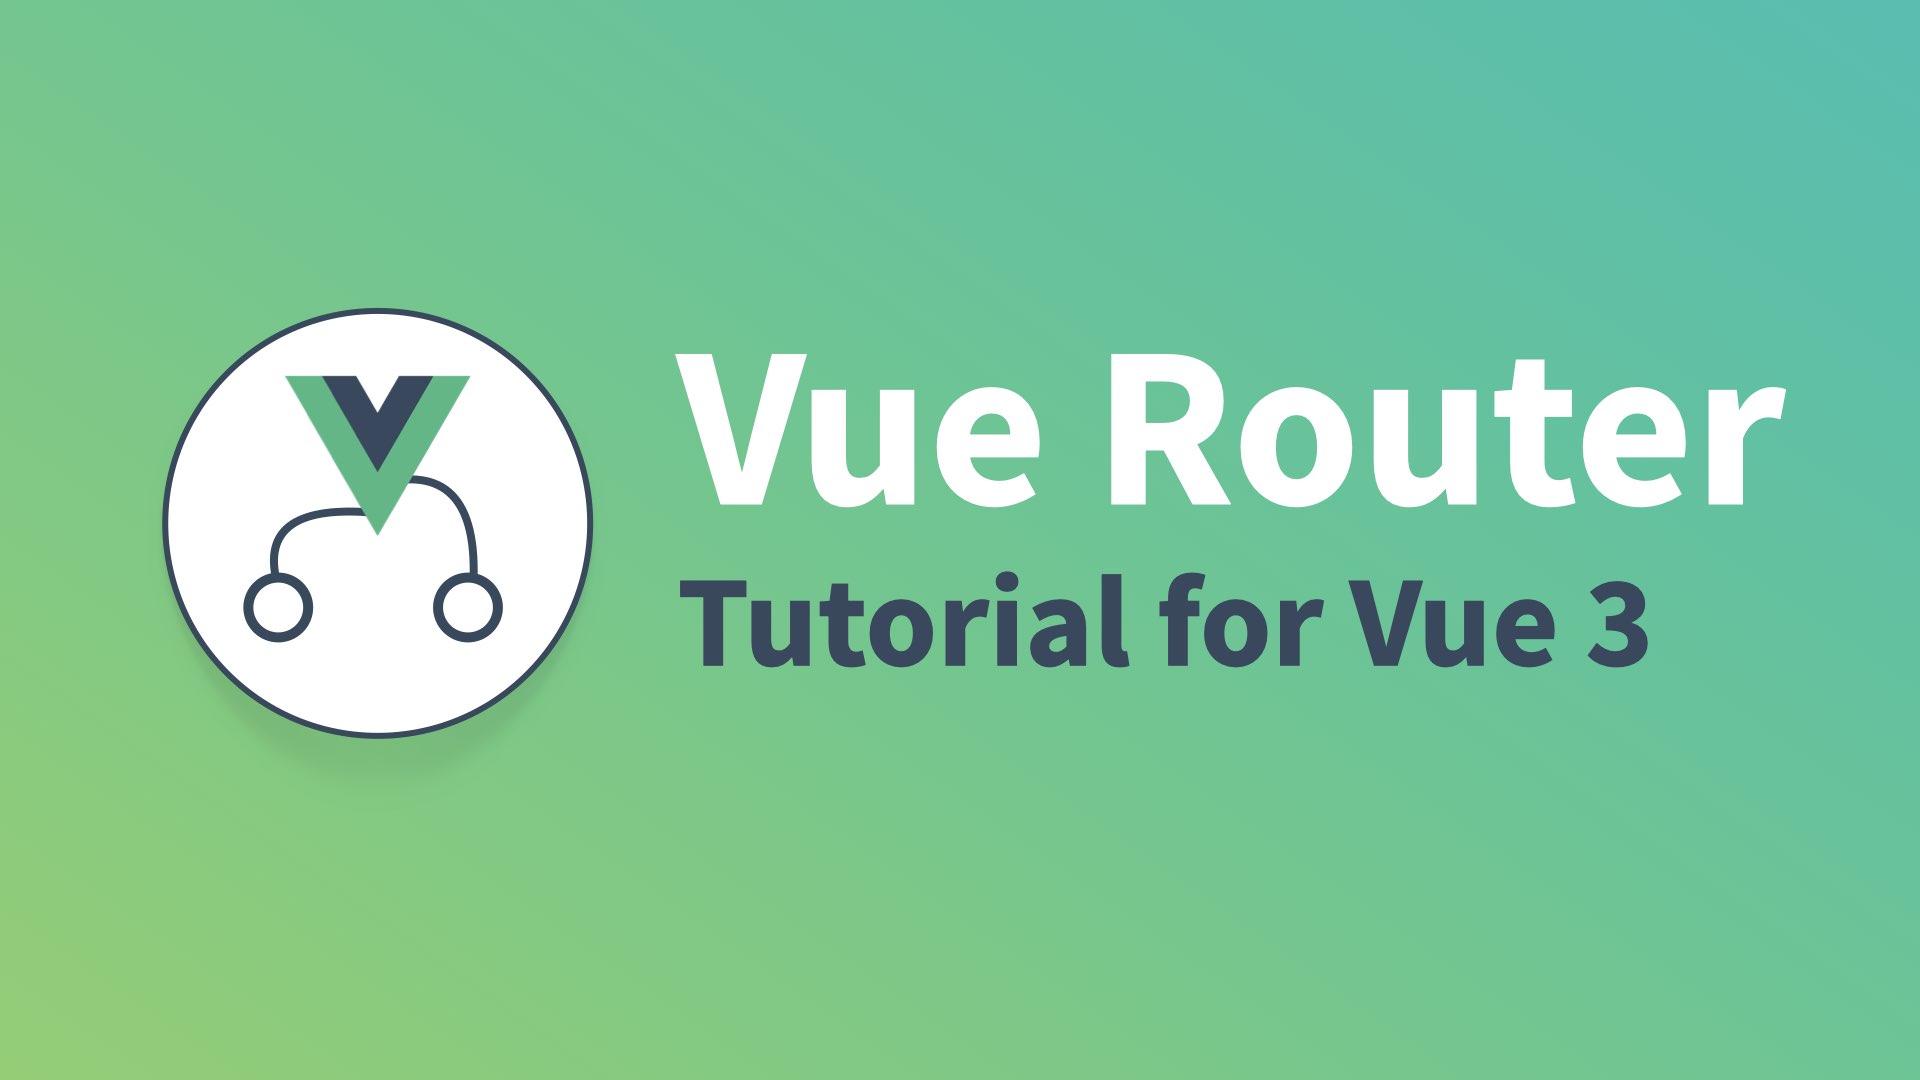 Vue Router: A Tutorial for Vue 3